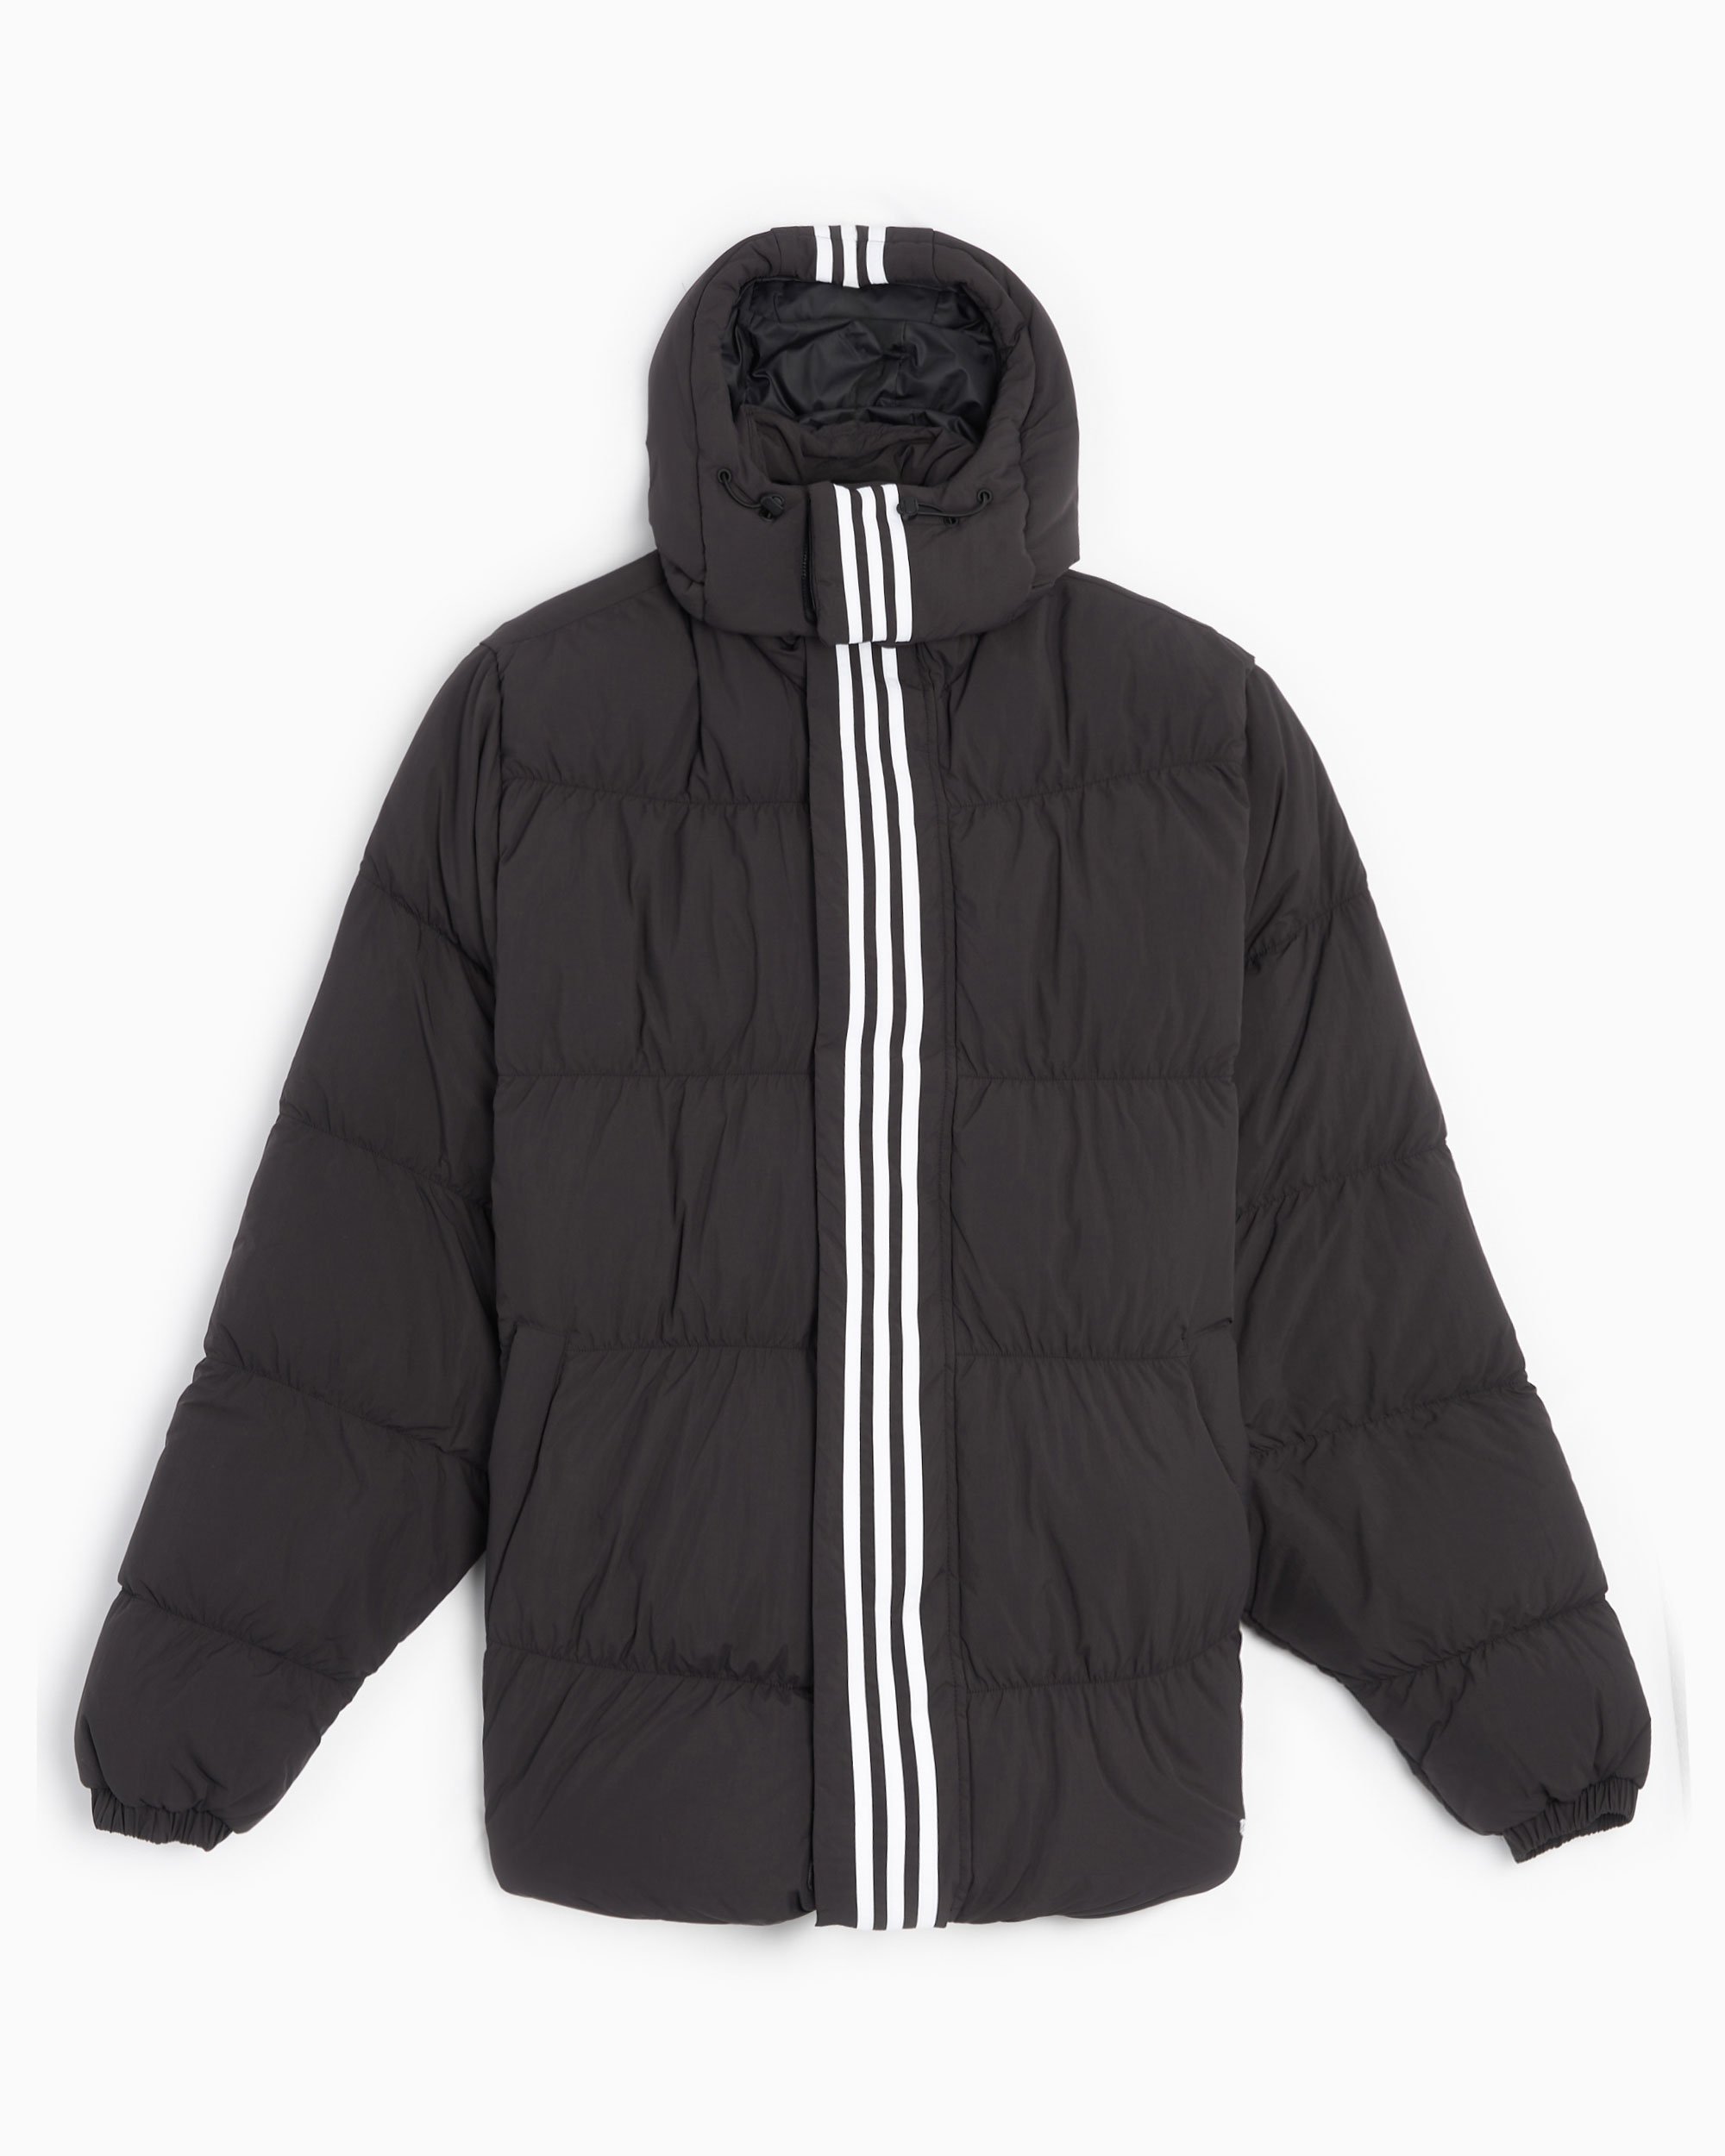 Jacket at FOOTDISTRICT Black Buy Originals Men\'s HZ0688| adidas Regen Puffer Online RIFTA